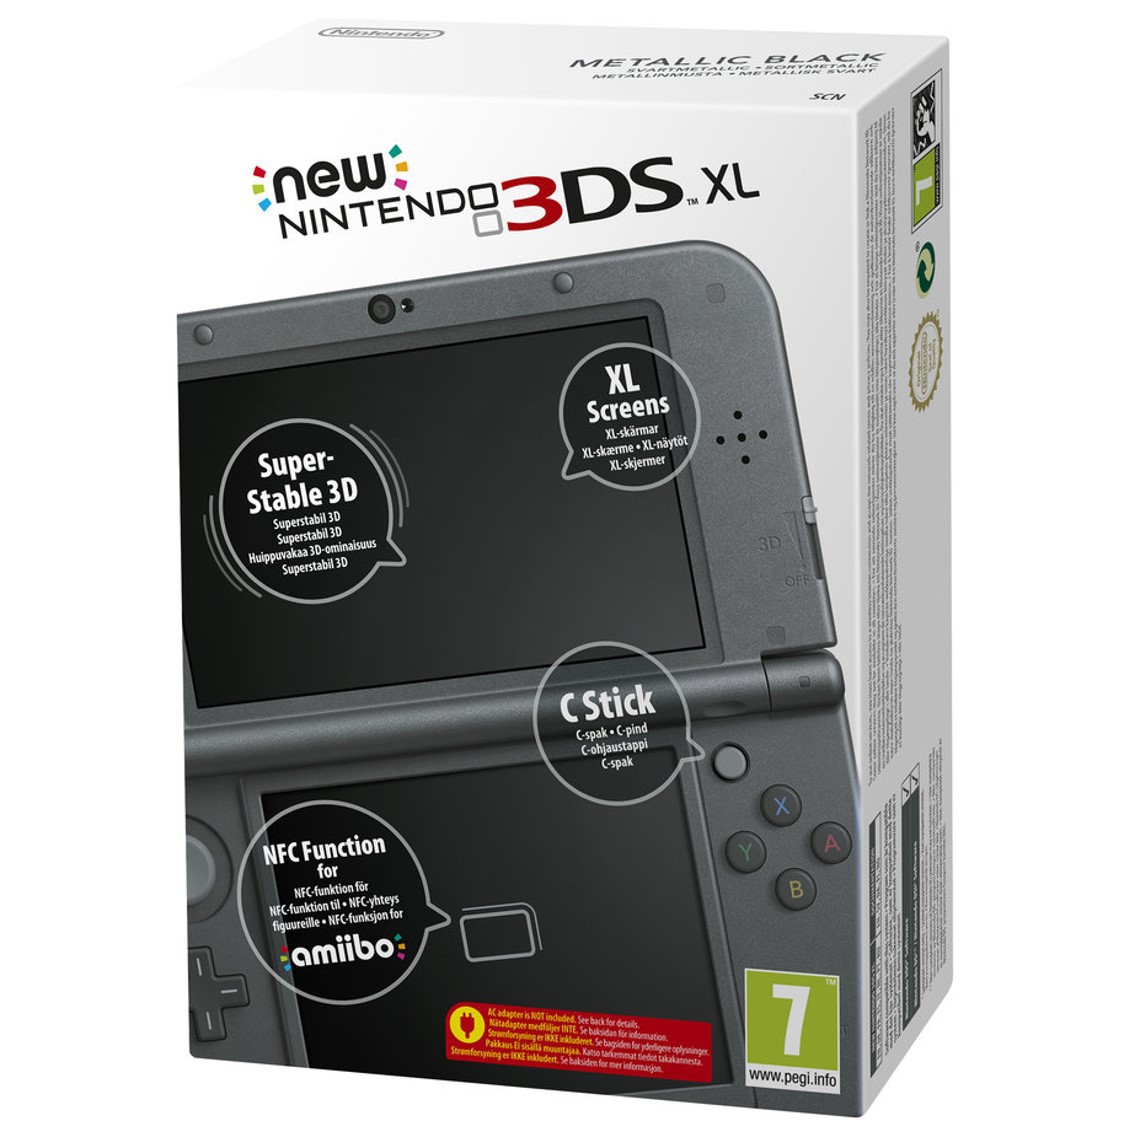 New Nintendo 3DS XL - Metallic Black [Complete] - Nintendo 3DS Hardware